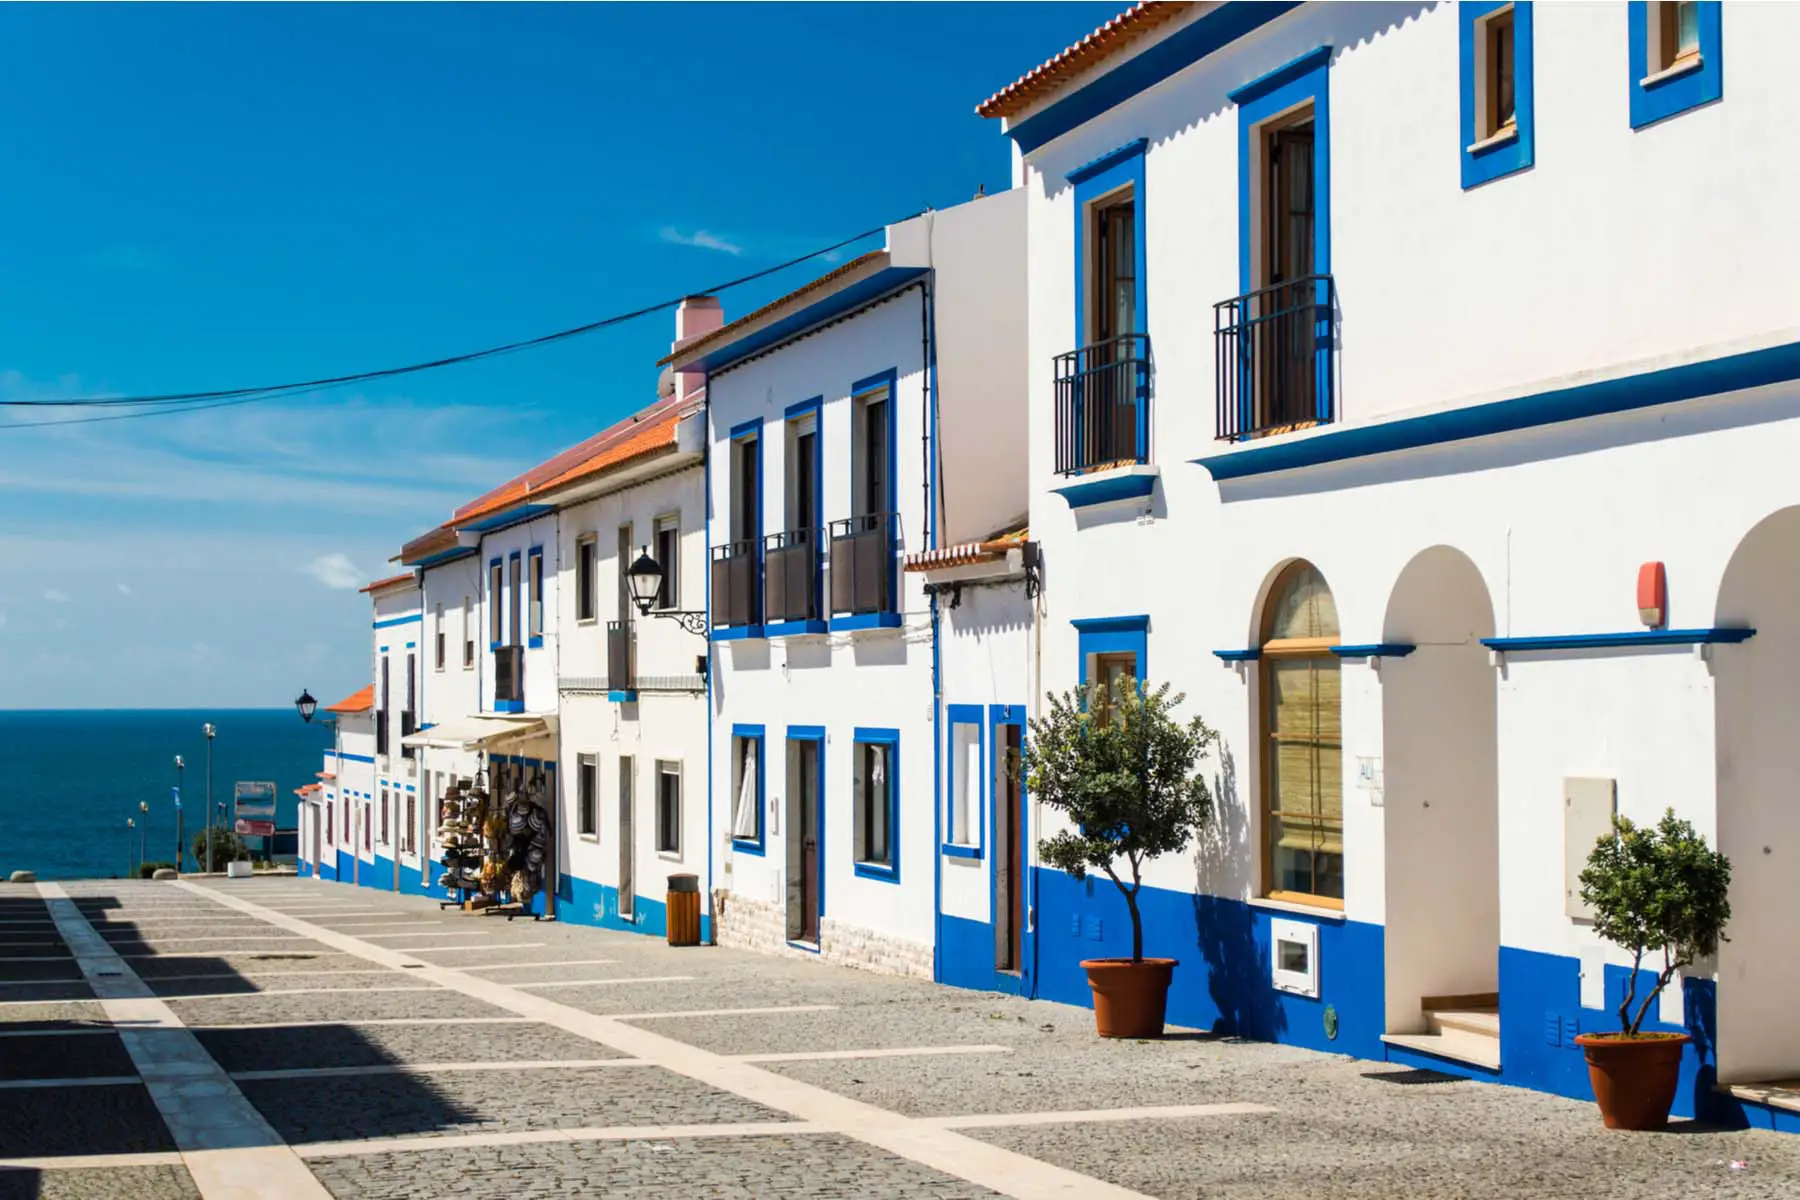 Portuguese homes